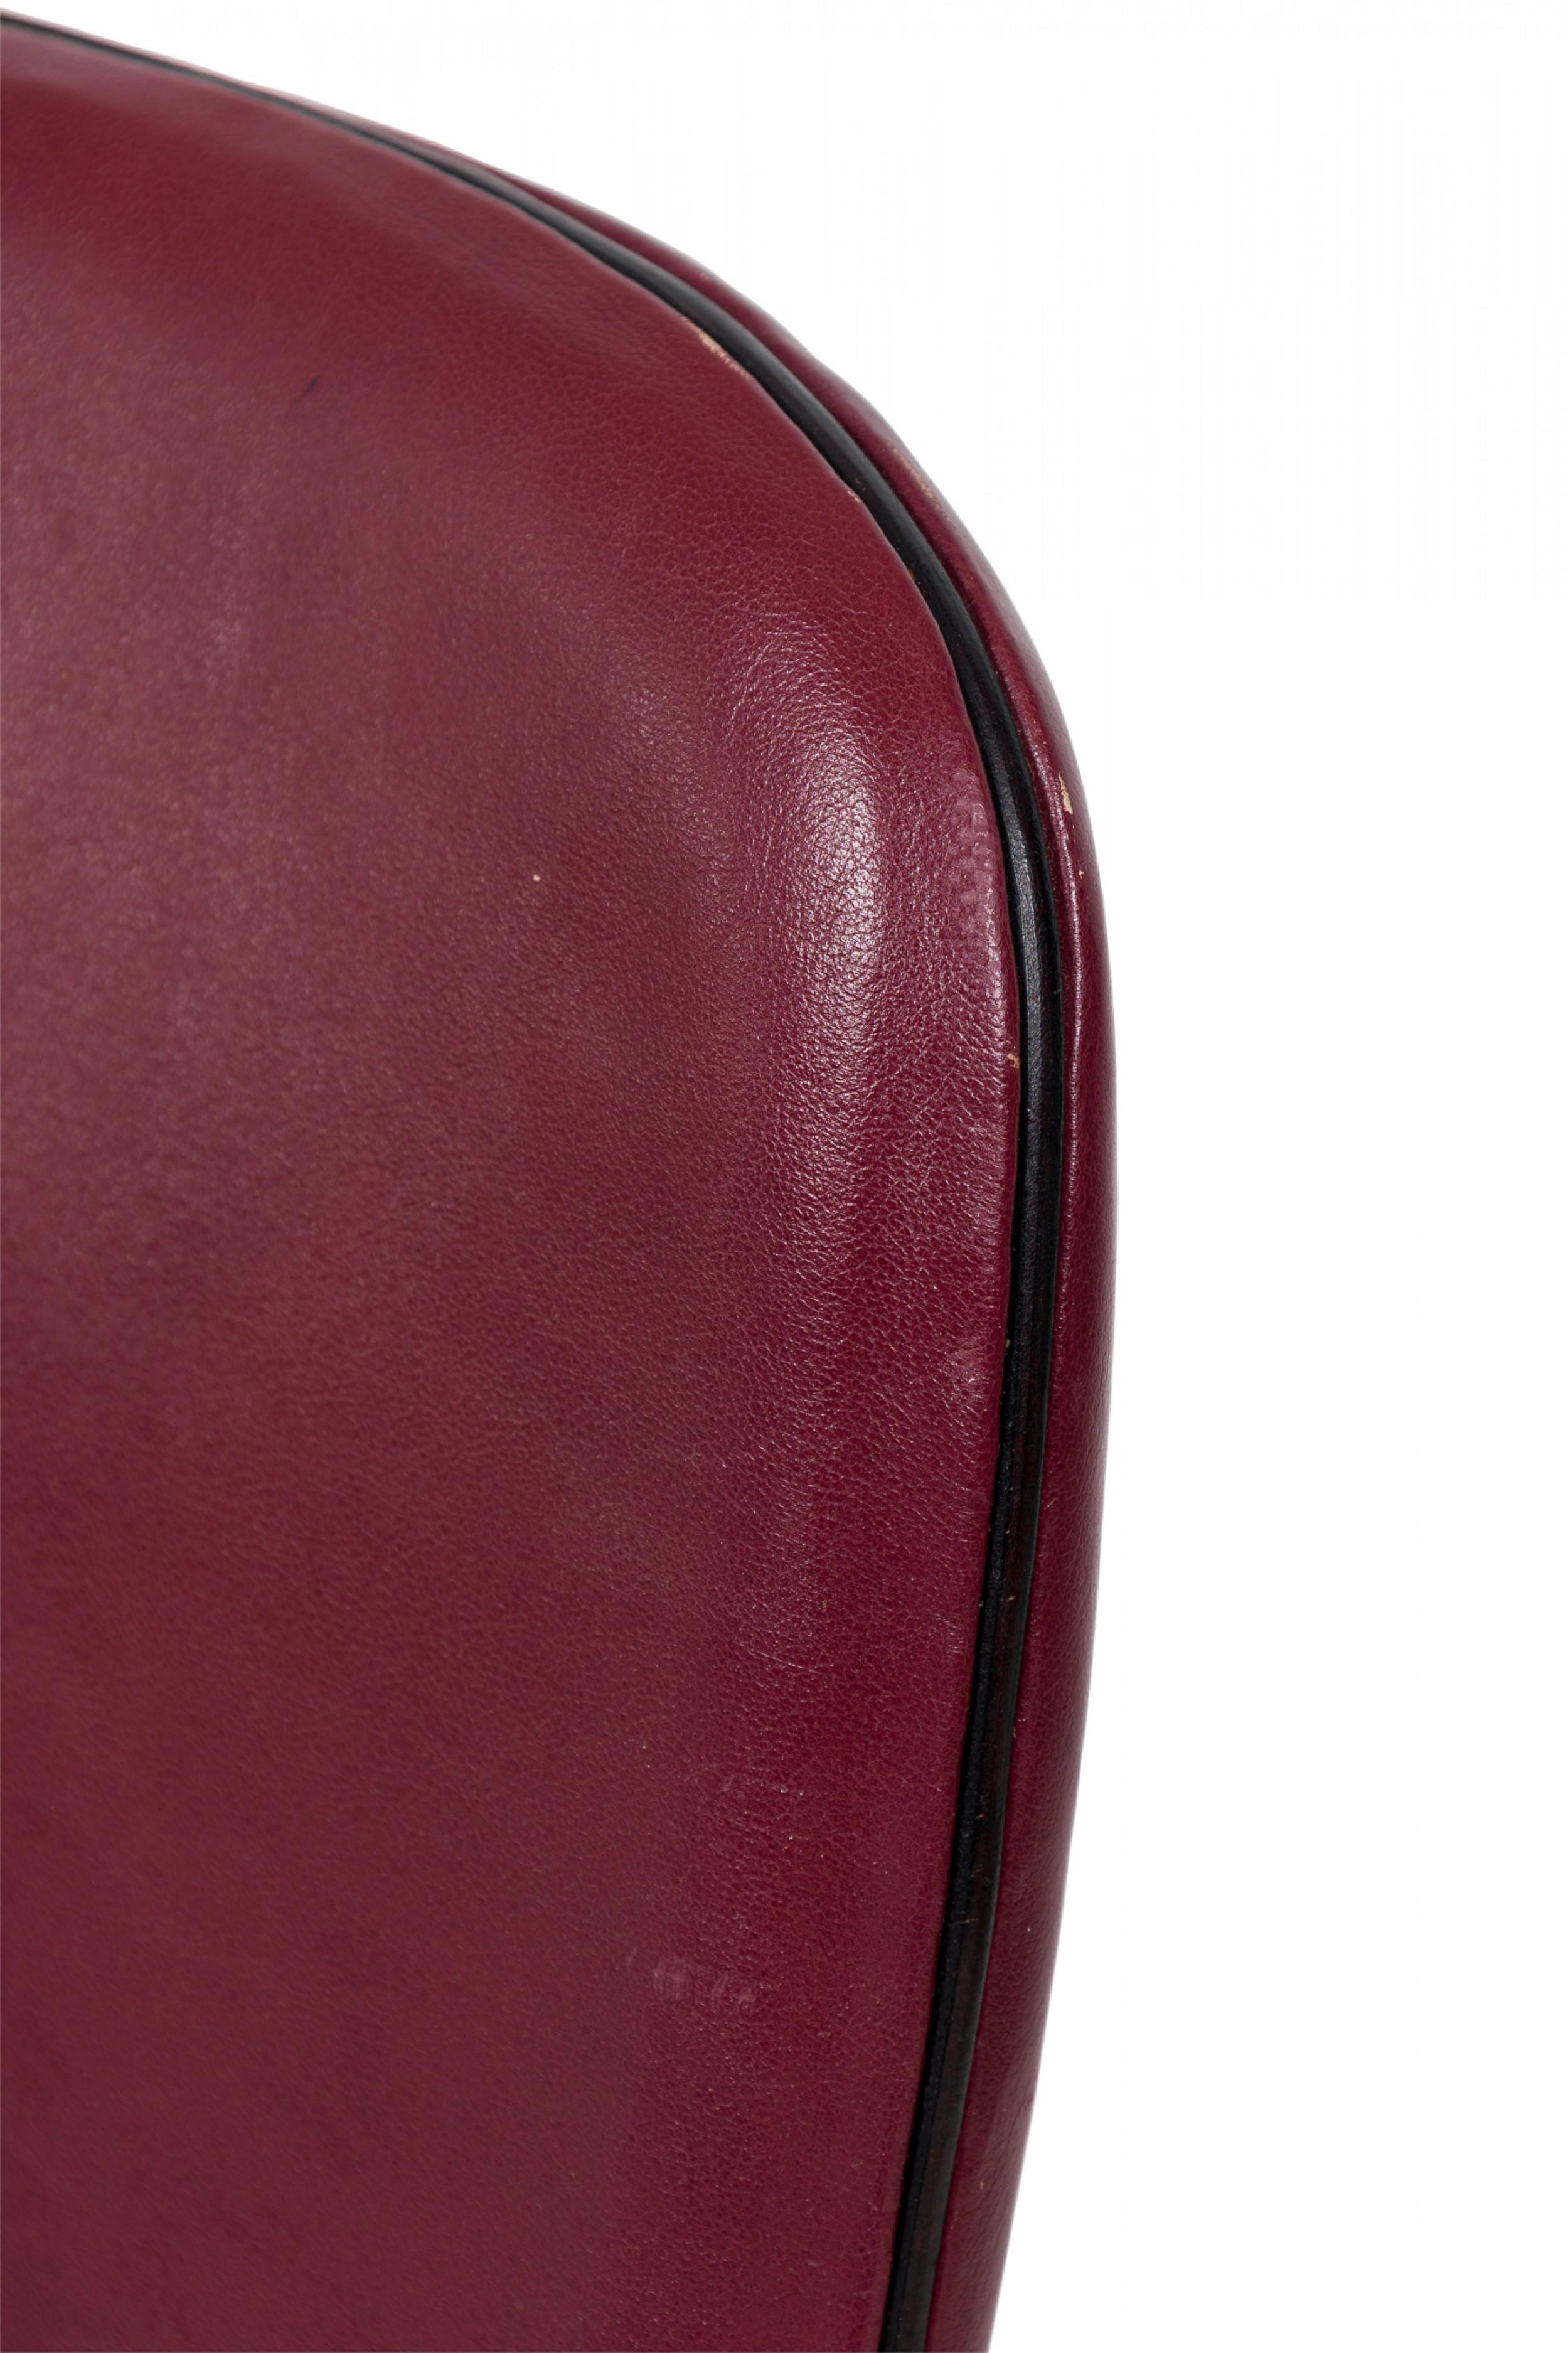 Set of 8 Skovby Møbelfabrik Danish Modern Teak Red Upholstered Dining Chairs For Sale 1